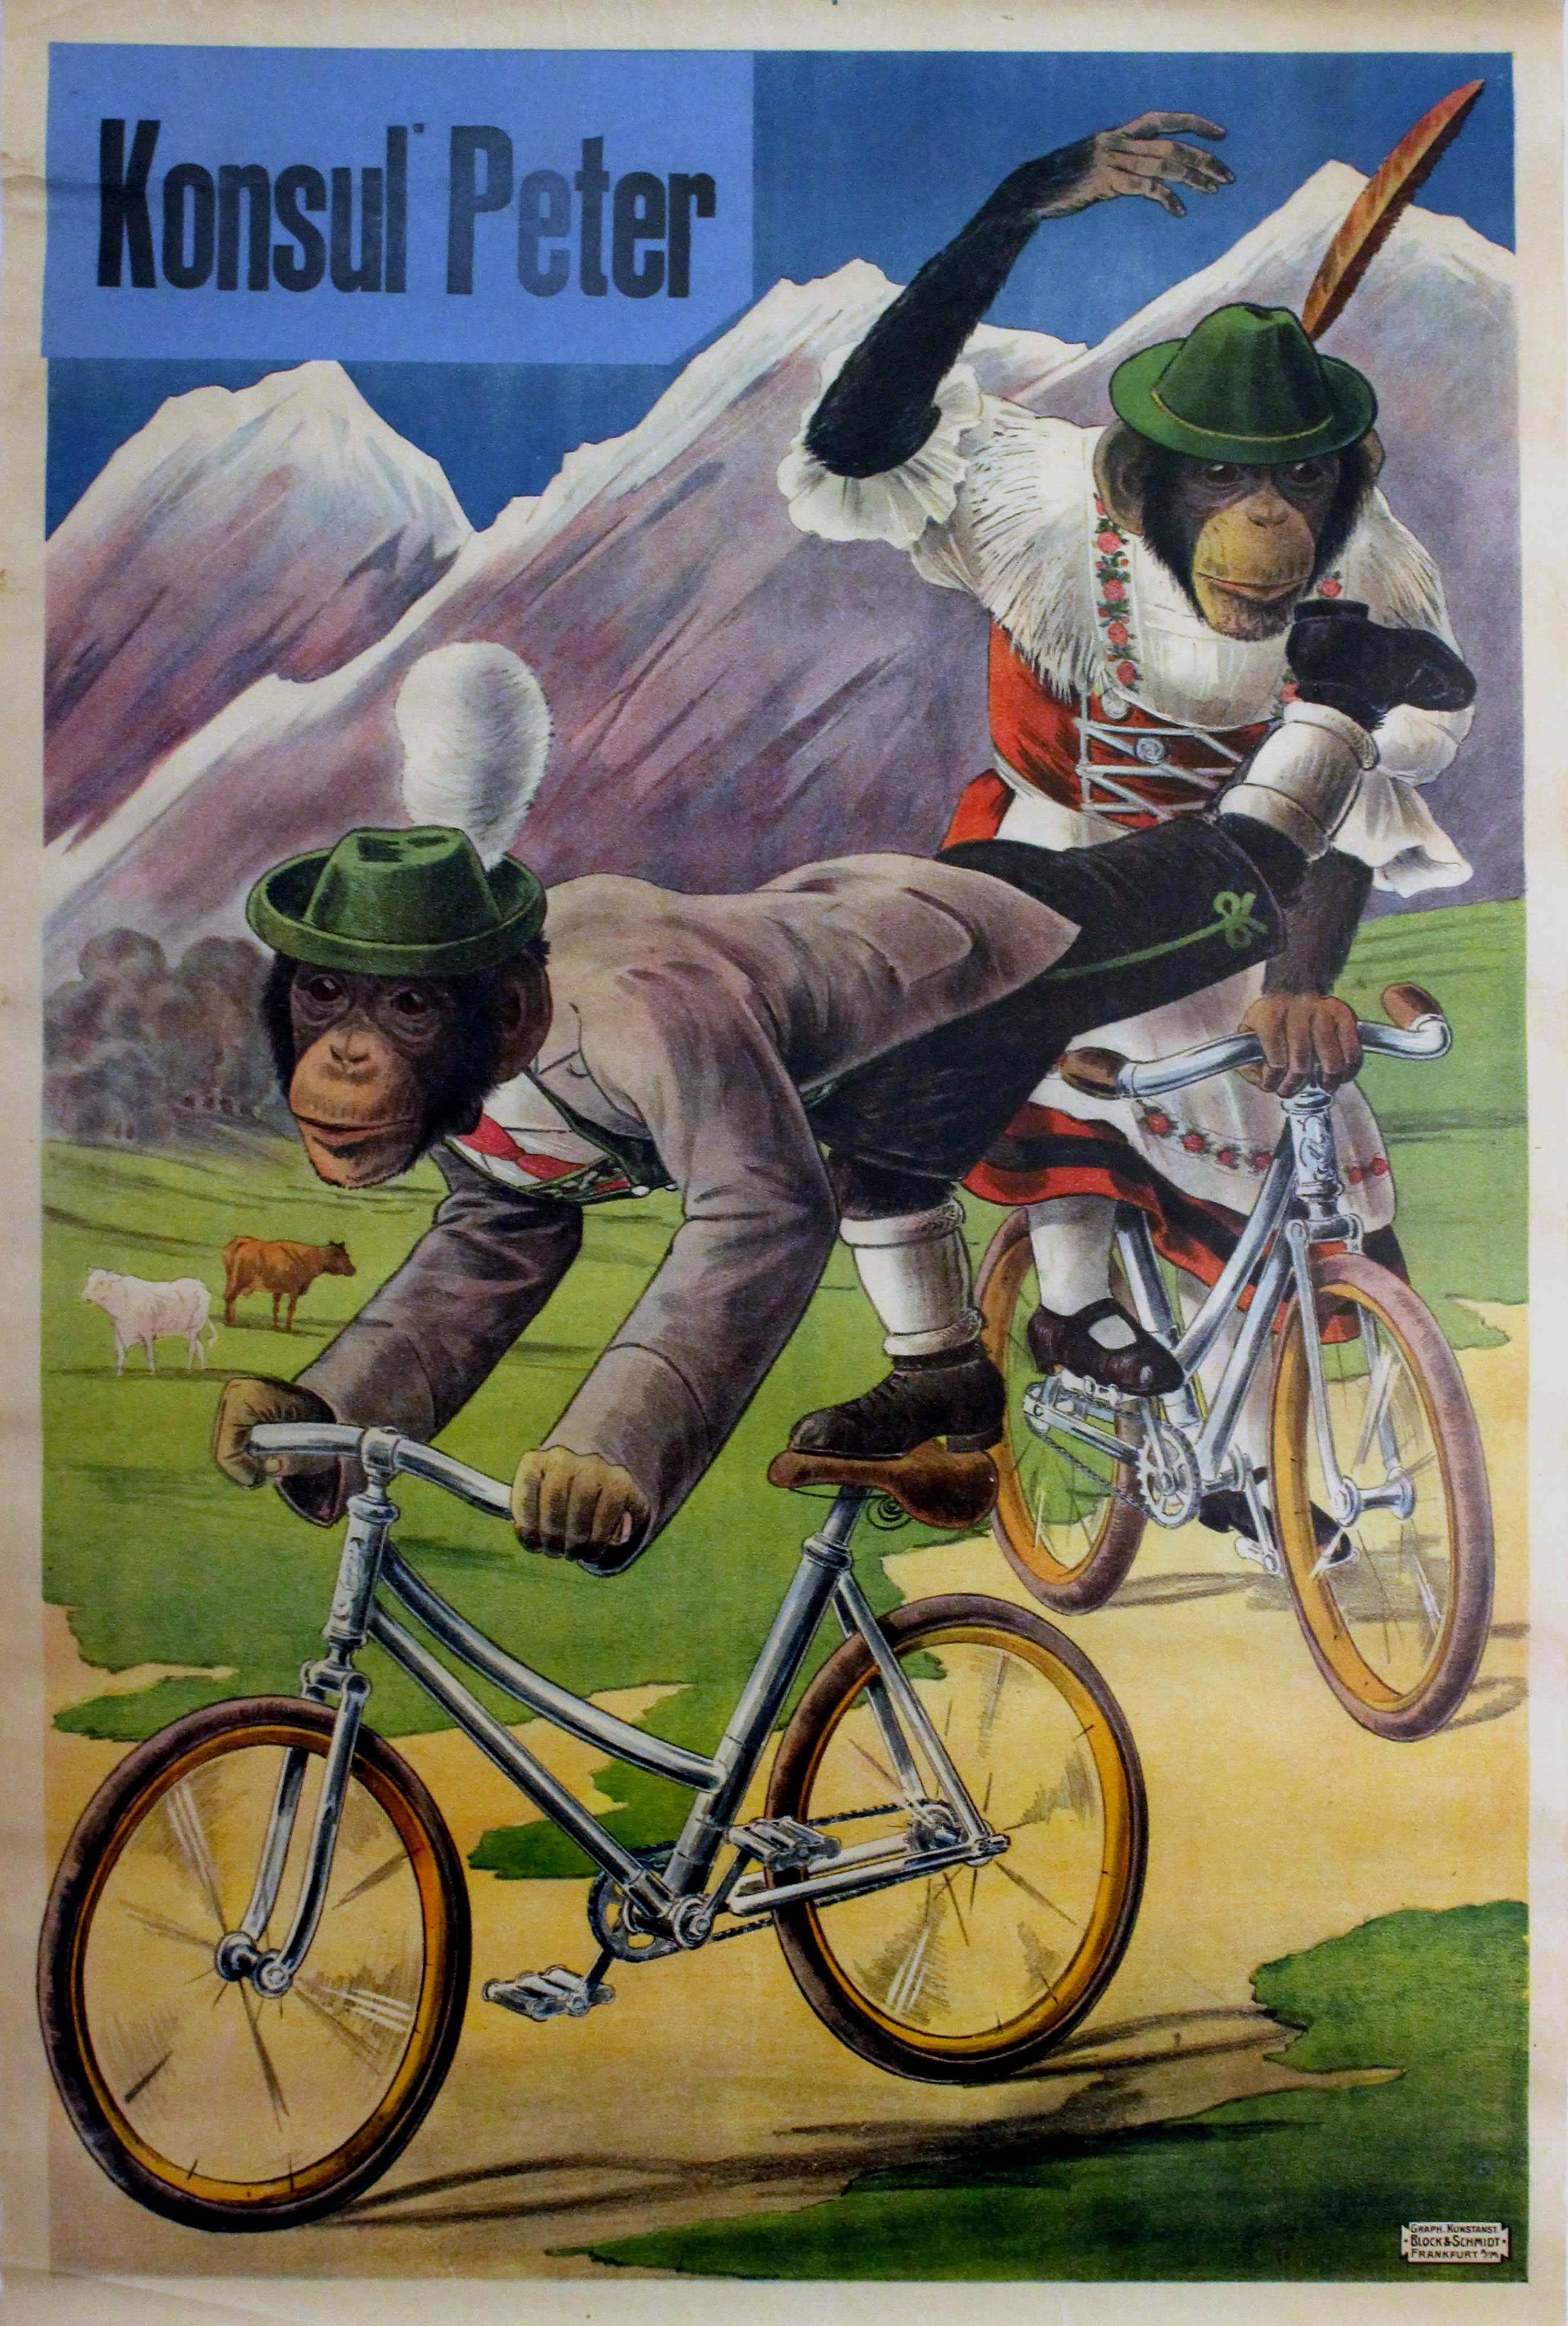 Block & Schmidt Print - Original Antique 1910s Circus Advertising Poster For Konsul Peter - Consul Peter